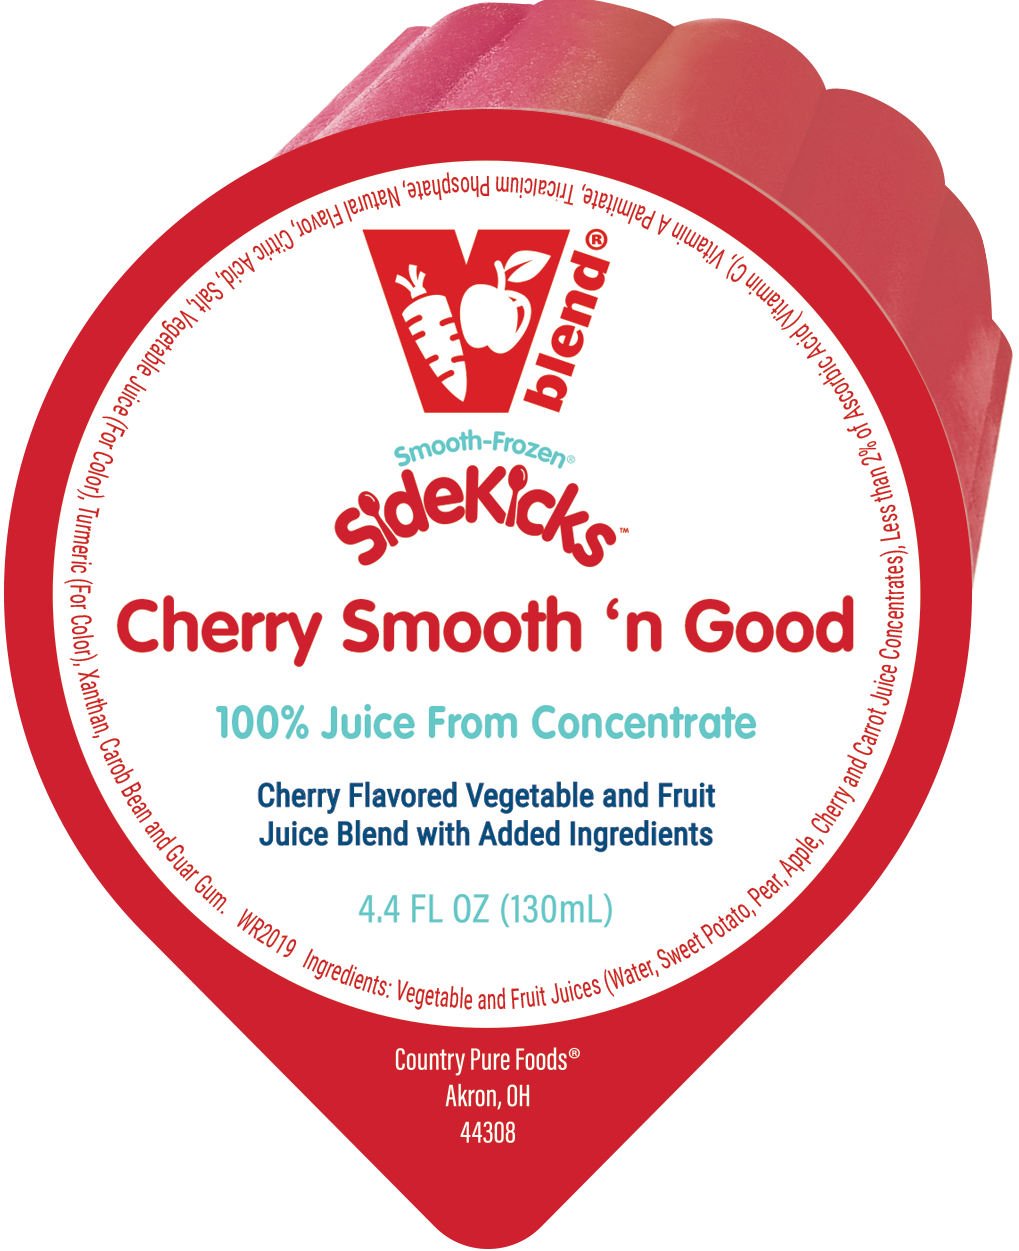 Smooth-Frozen SideKicks Cherry Smooth 'n Good